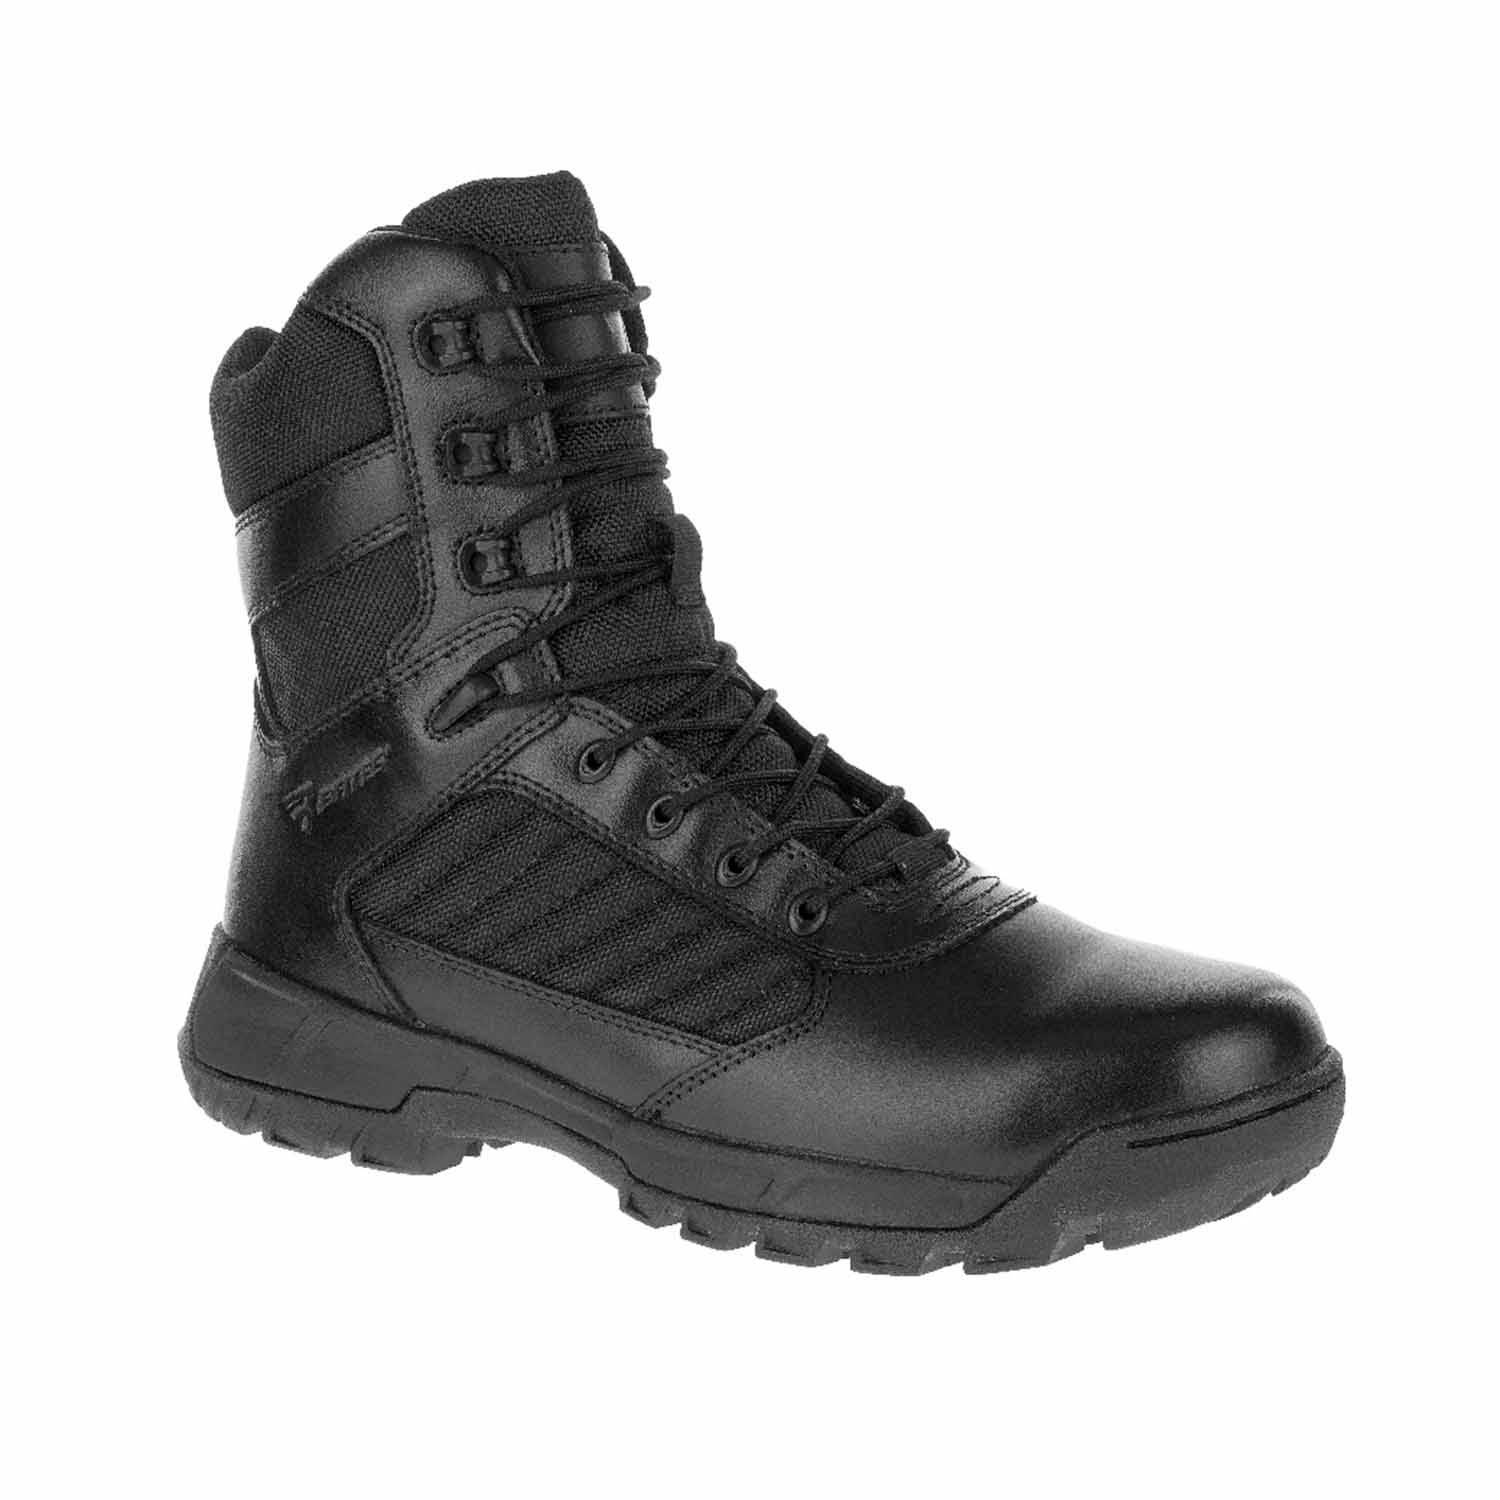 Bates Tactical Sport 2 Tall Side-Zip Boots | Bates Boots